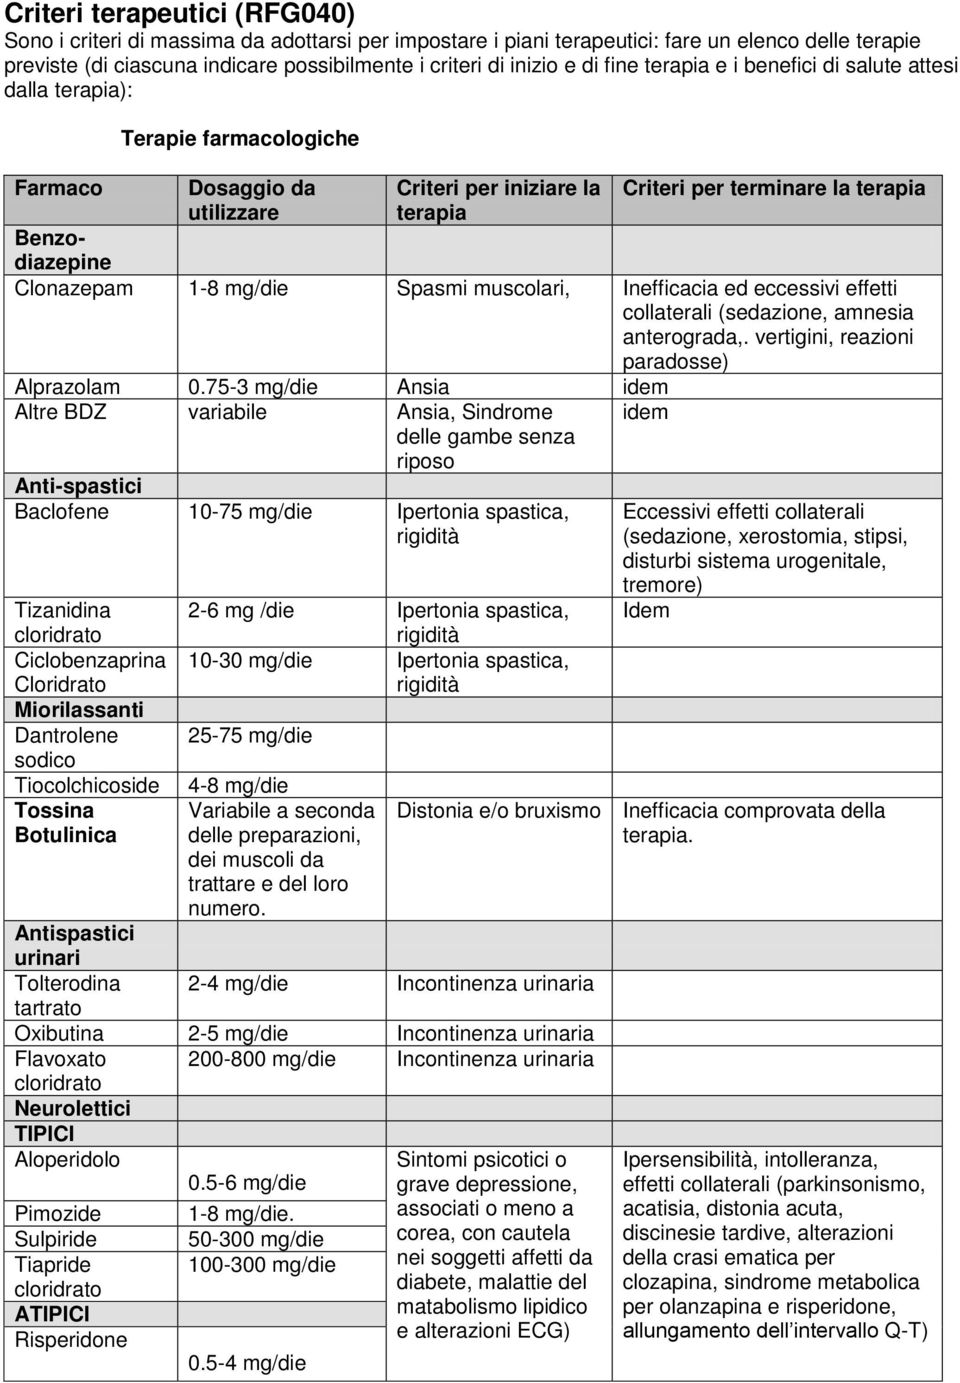 Clonazepam 1-8 mg/die Spasmi muscolari, Inefficacia ed eccessivi effetti collaterali (sedazione, amnesia anterograda,. vertigini, reazioni paradosse) Alprazolam 0.